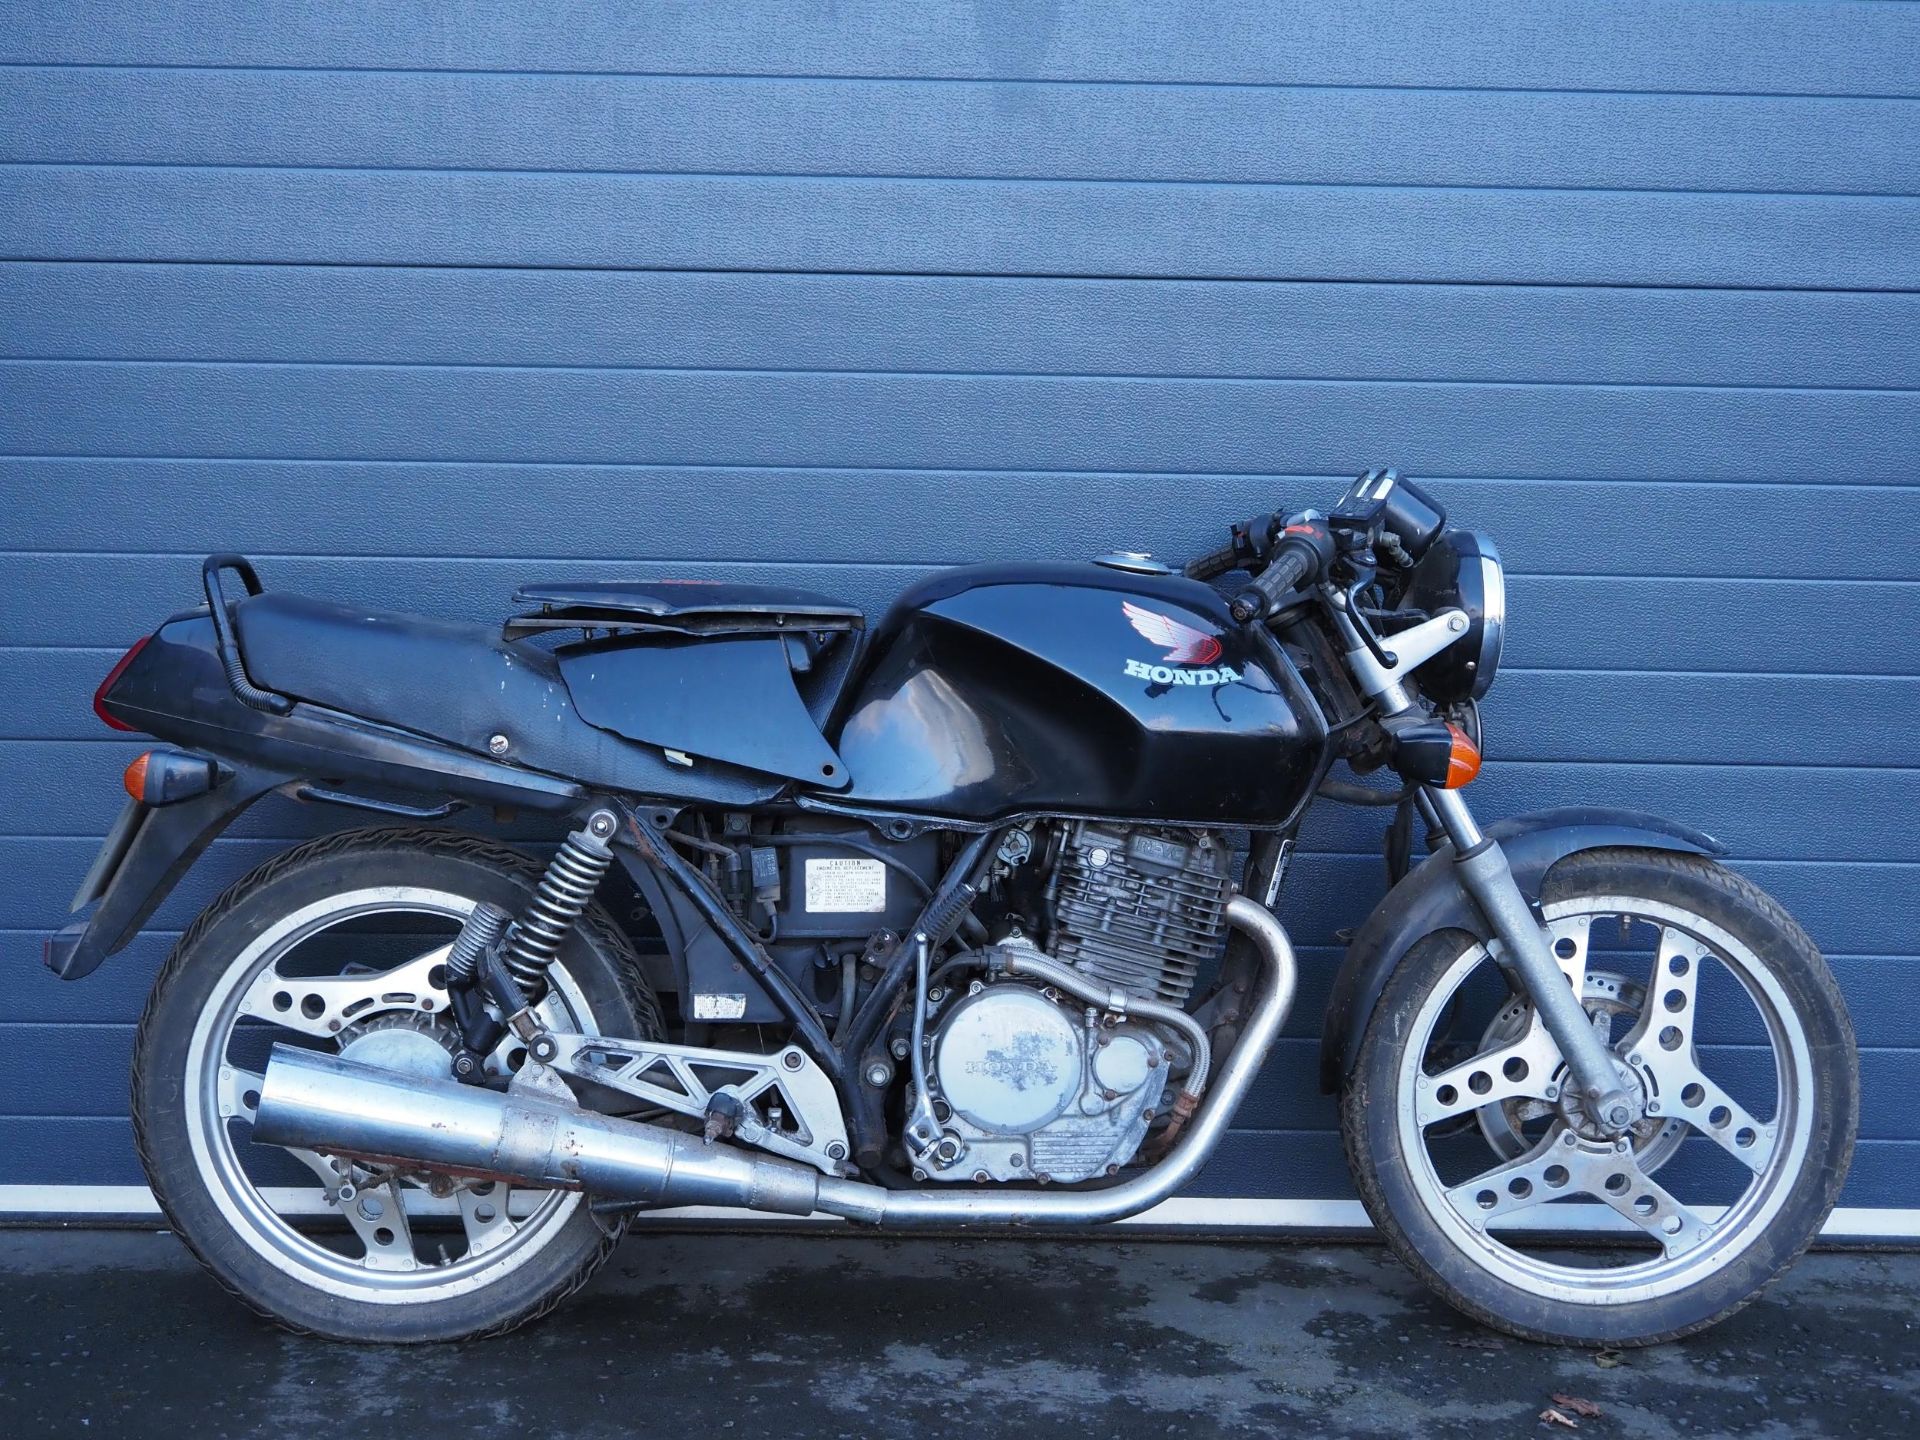 Honda XBR 500 motorcycle. 499cc. 1986 Engine turns over. Reg. C370 XFO. V5. Key